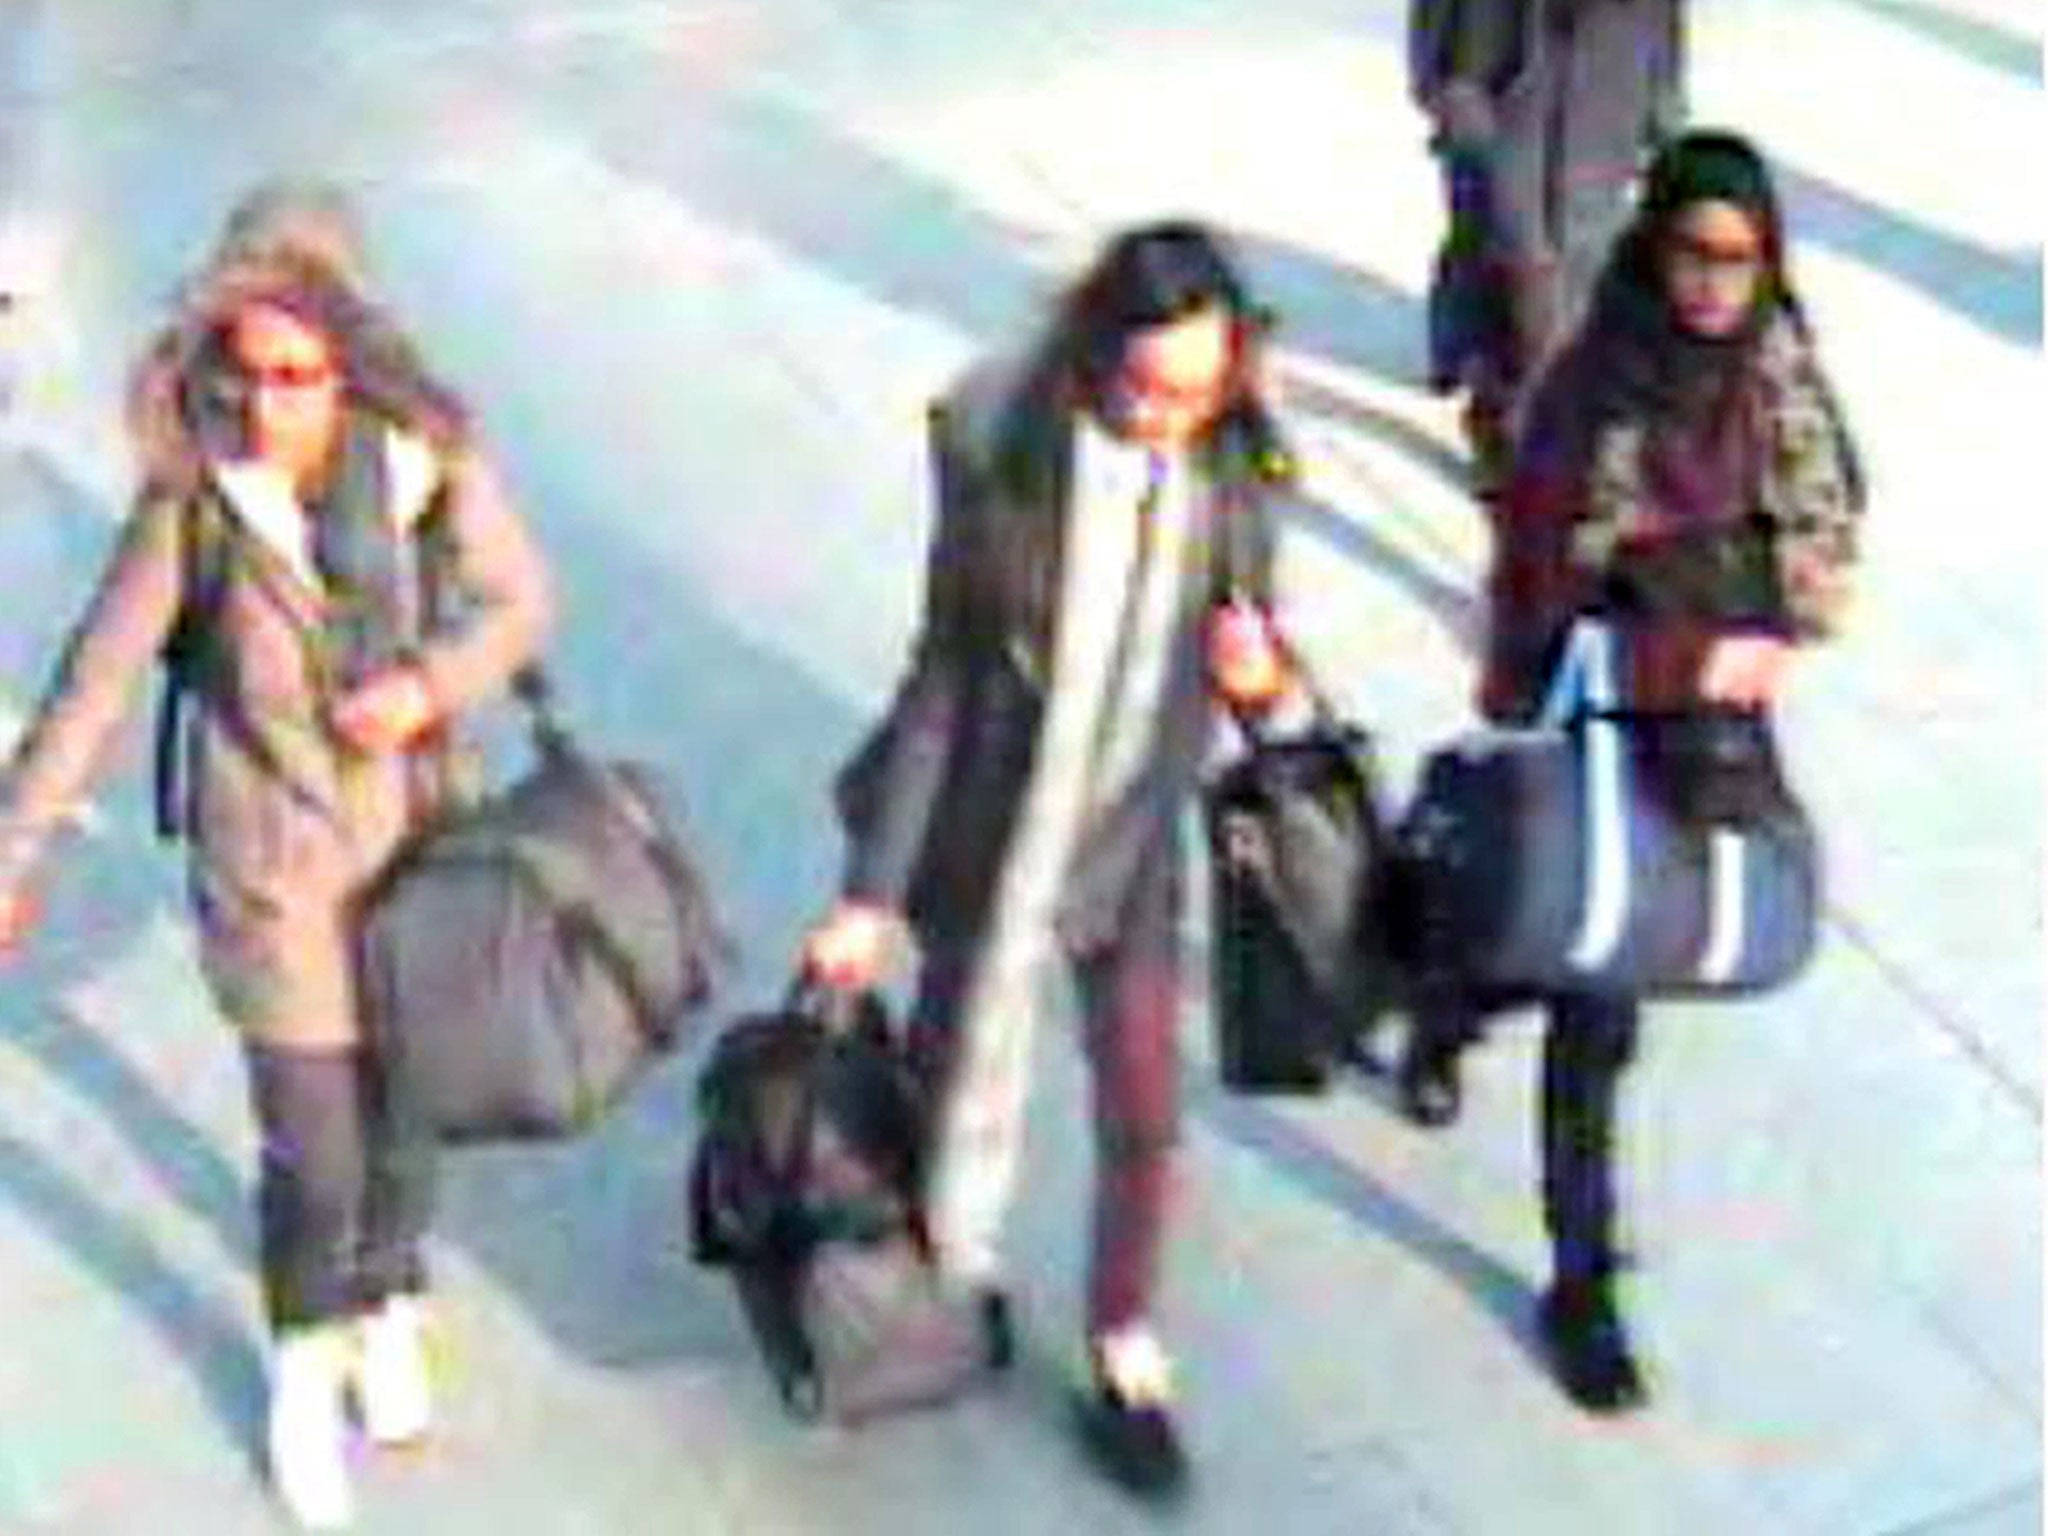 CCTV of 15-year-old Amira Abase, left, Kadiza Sultana,16, centre, and Shamima Begum, 15, walking through Gatwick airport